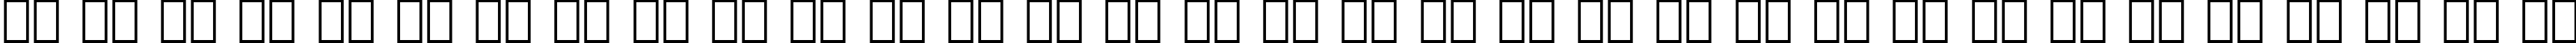 Пример написания русского алфавита шрифтом Zurich Black Extended BT